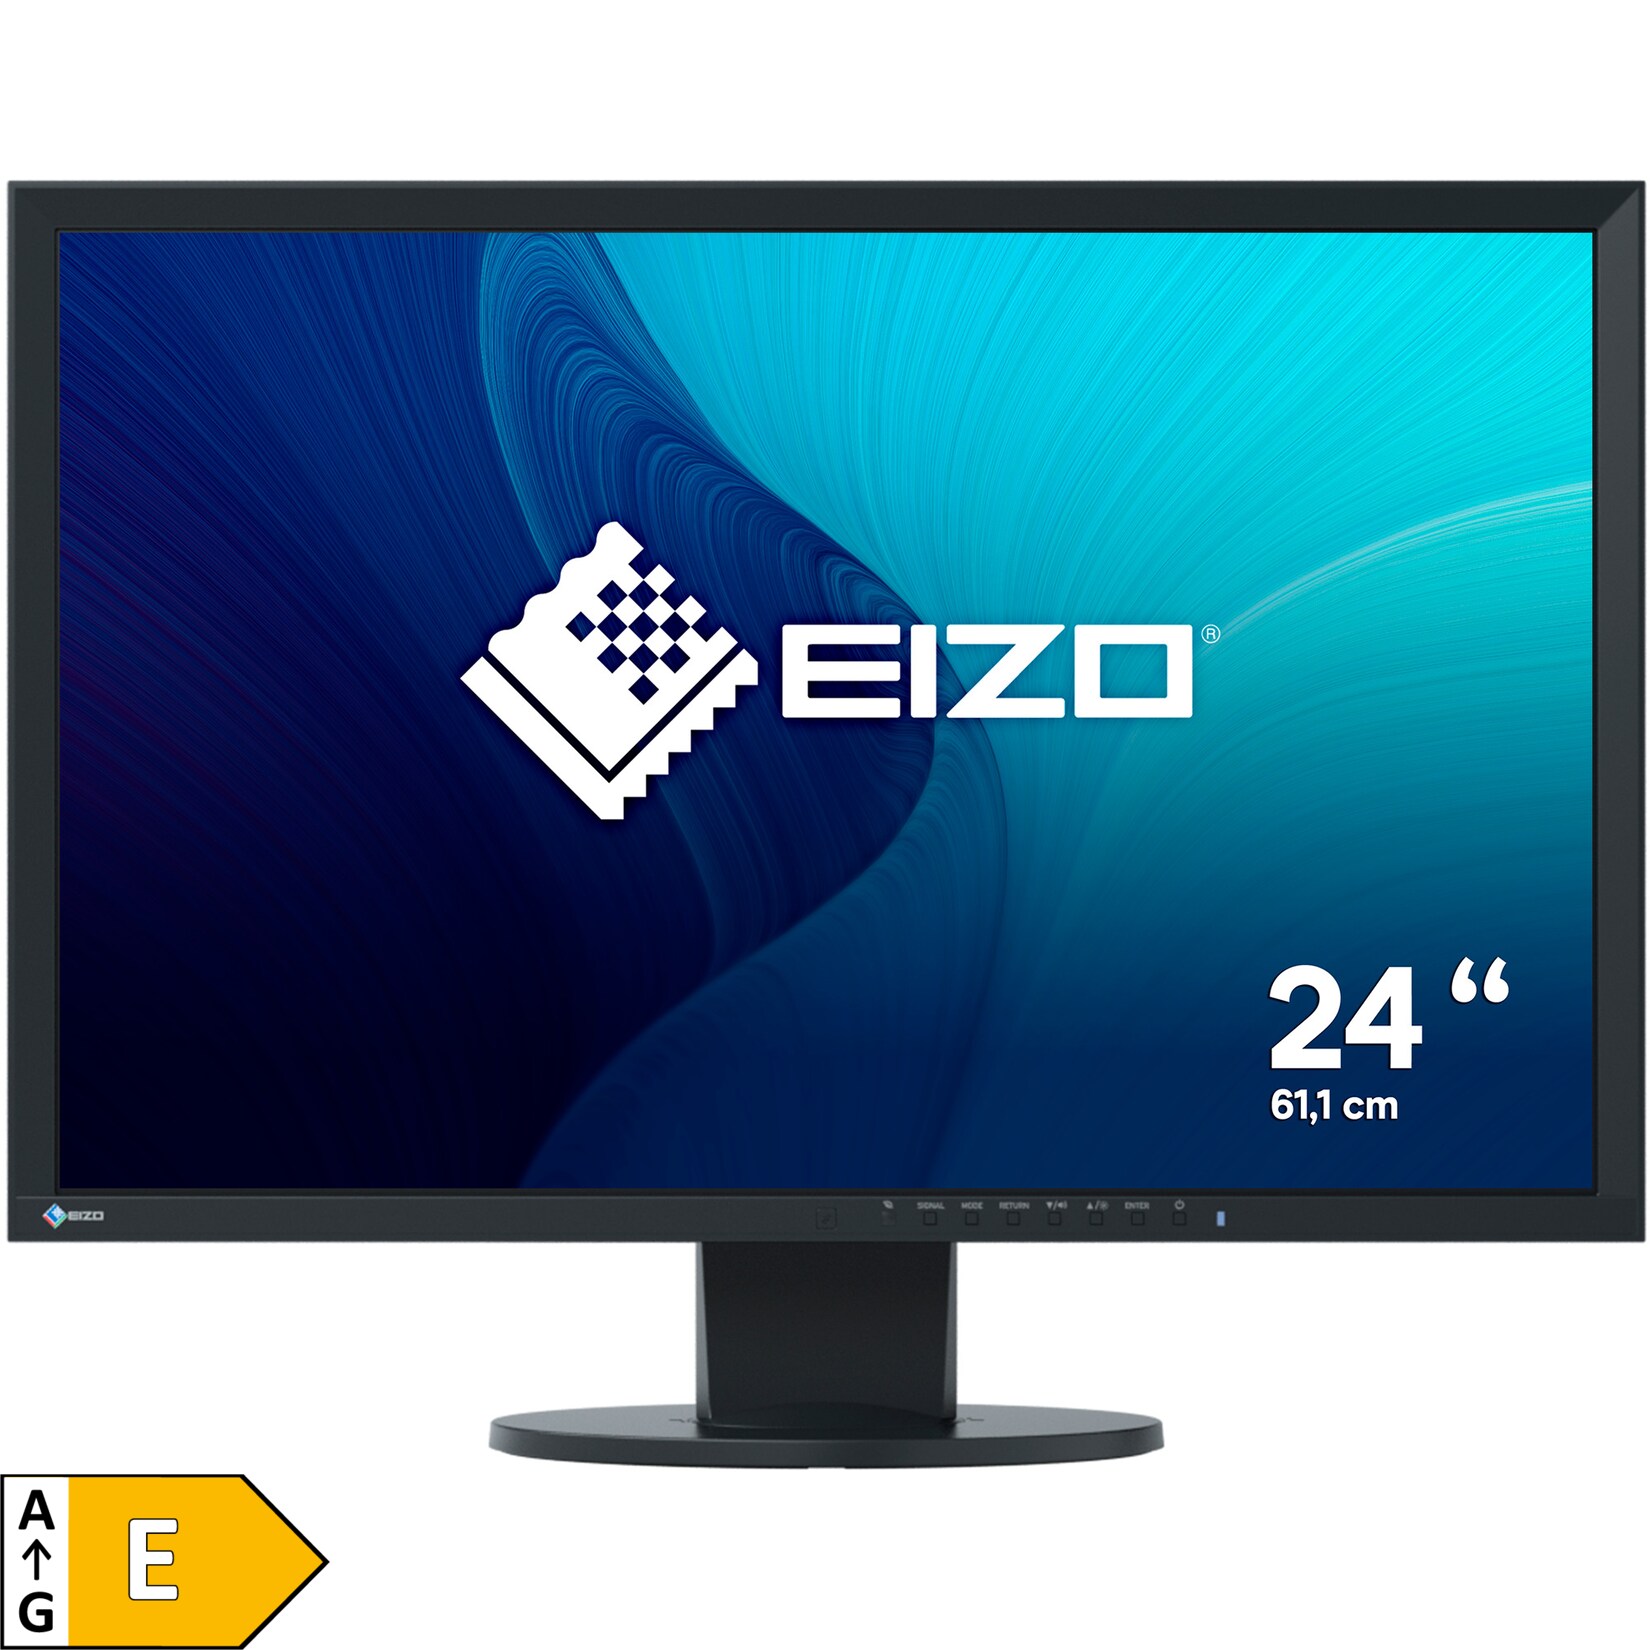 Eizo LED-Monitor EV2430-BK